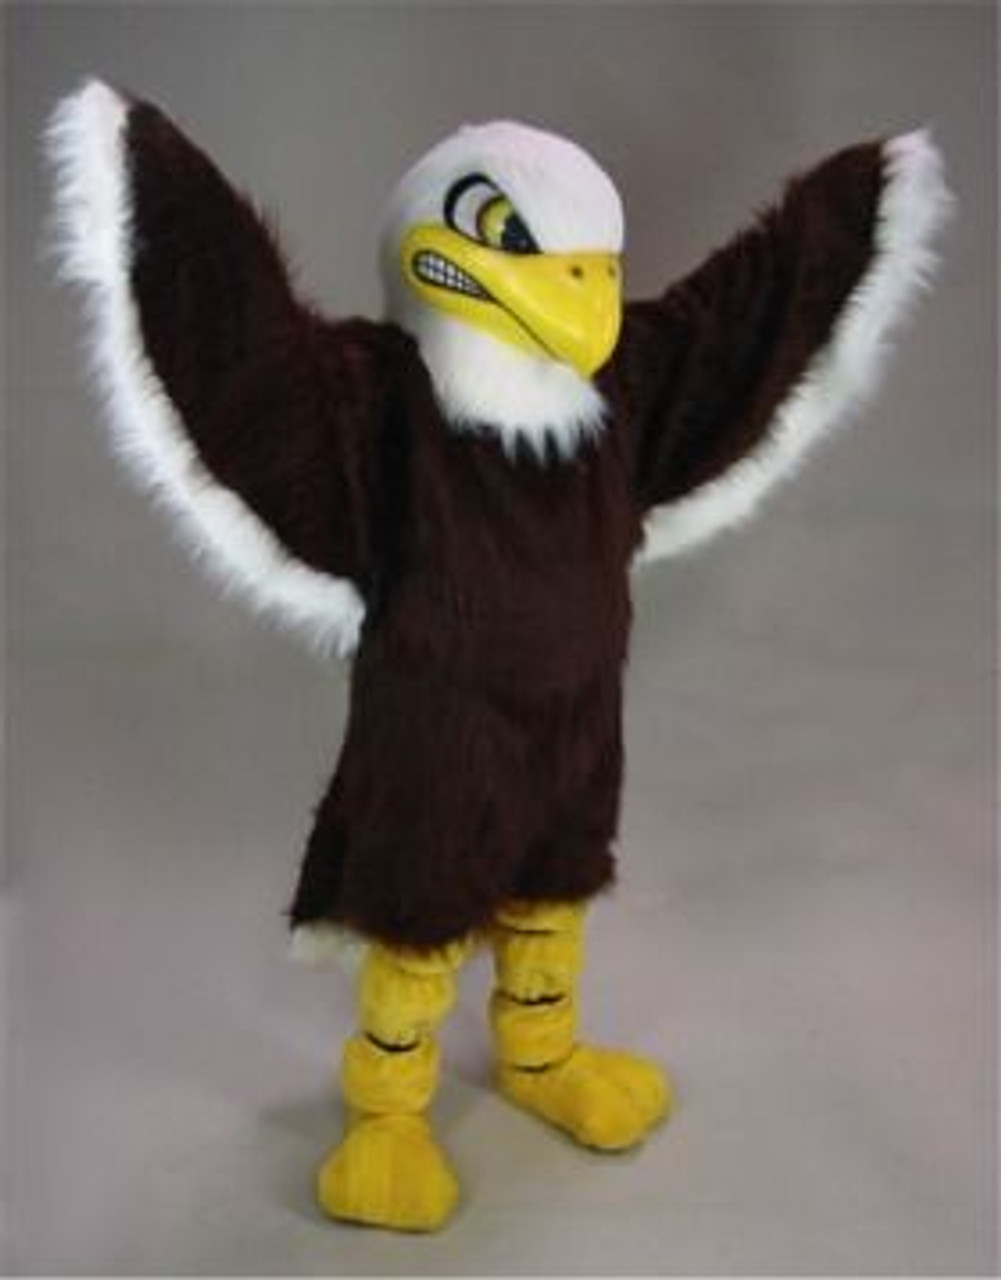 Eagle mascot costume AMAZING!! Mascots